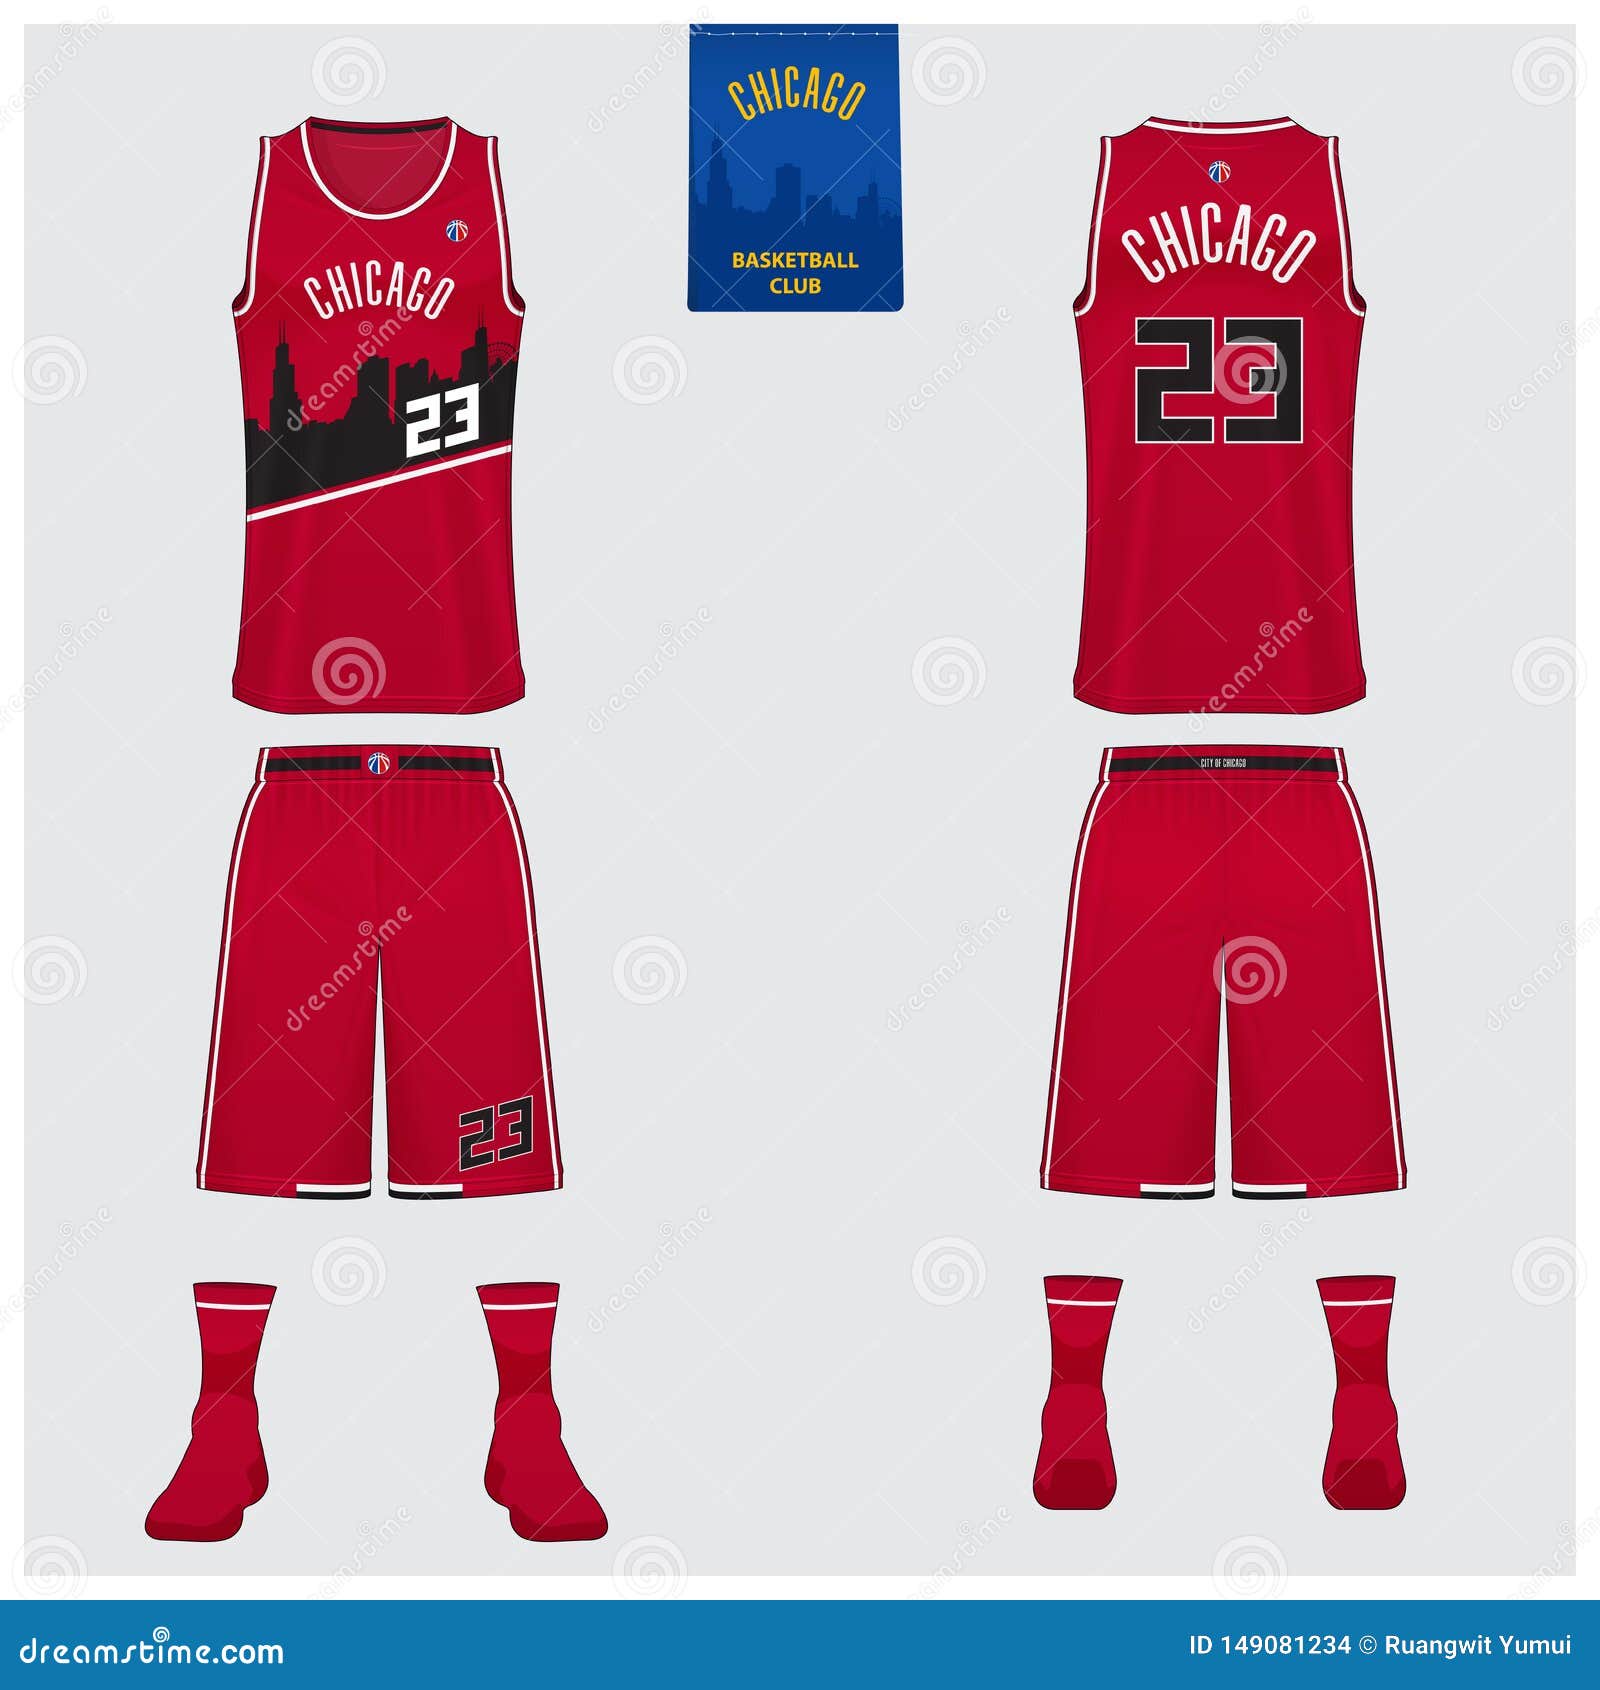 Basketball Uniform Mockup Template Design for Basketball Club